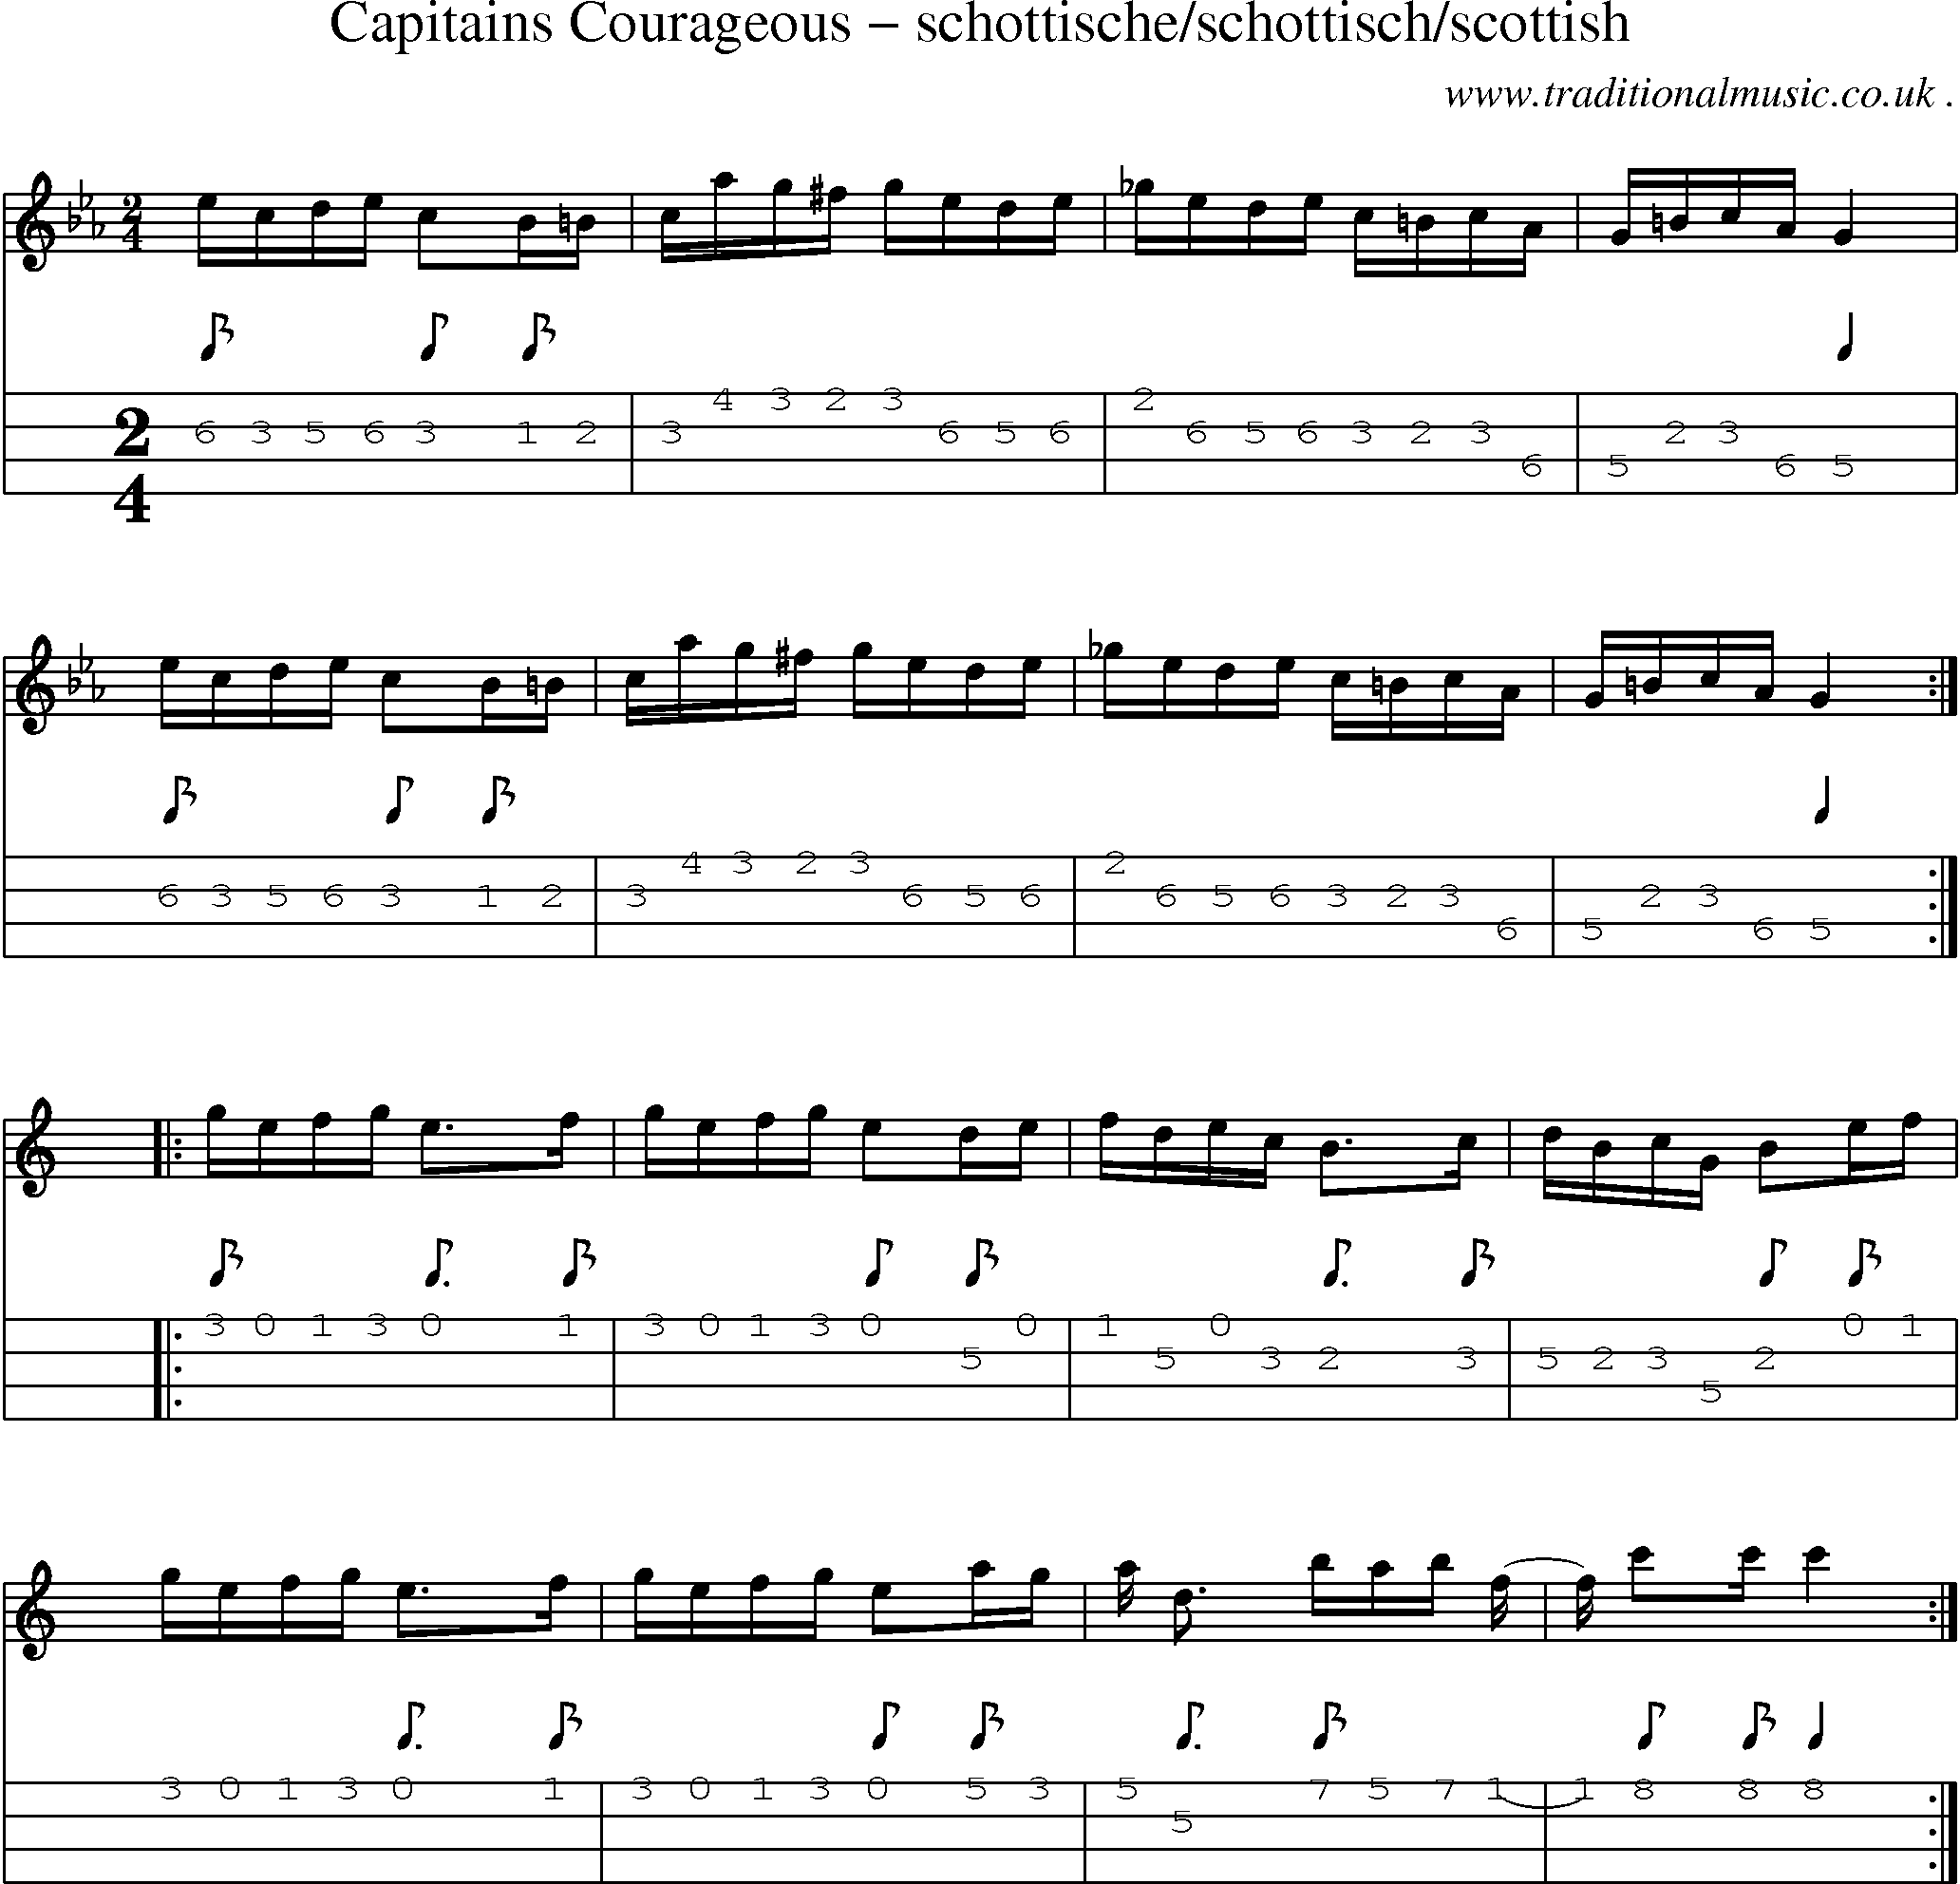 Sheet-Music and Mandolin Tabs for Capitains Courageous Schottischeschottischscottish